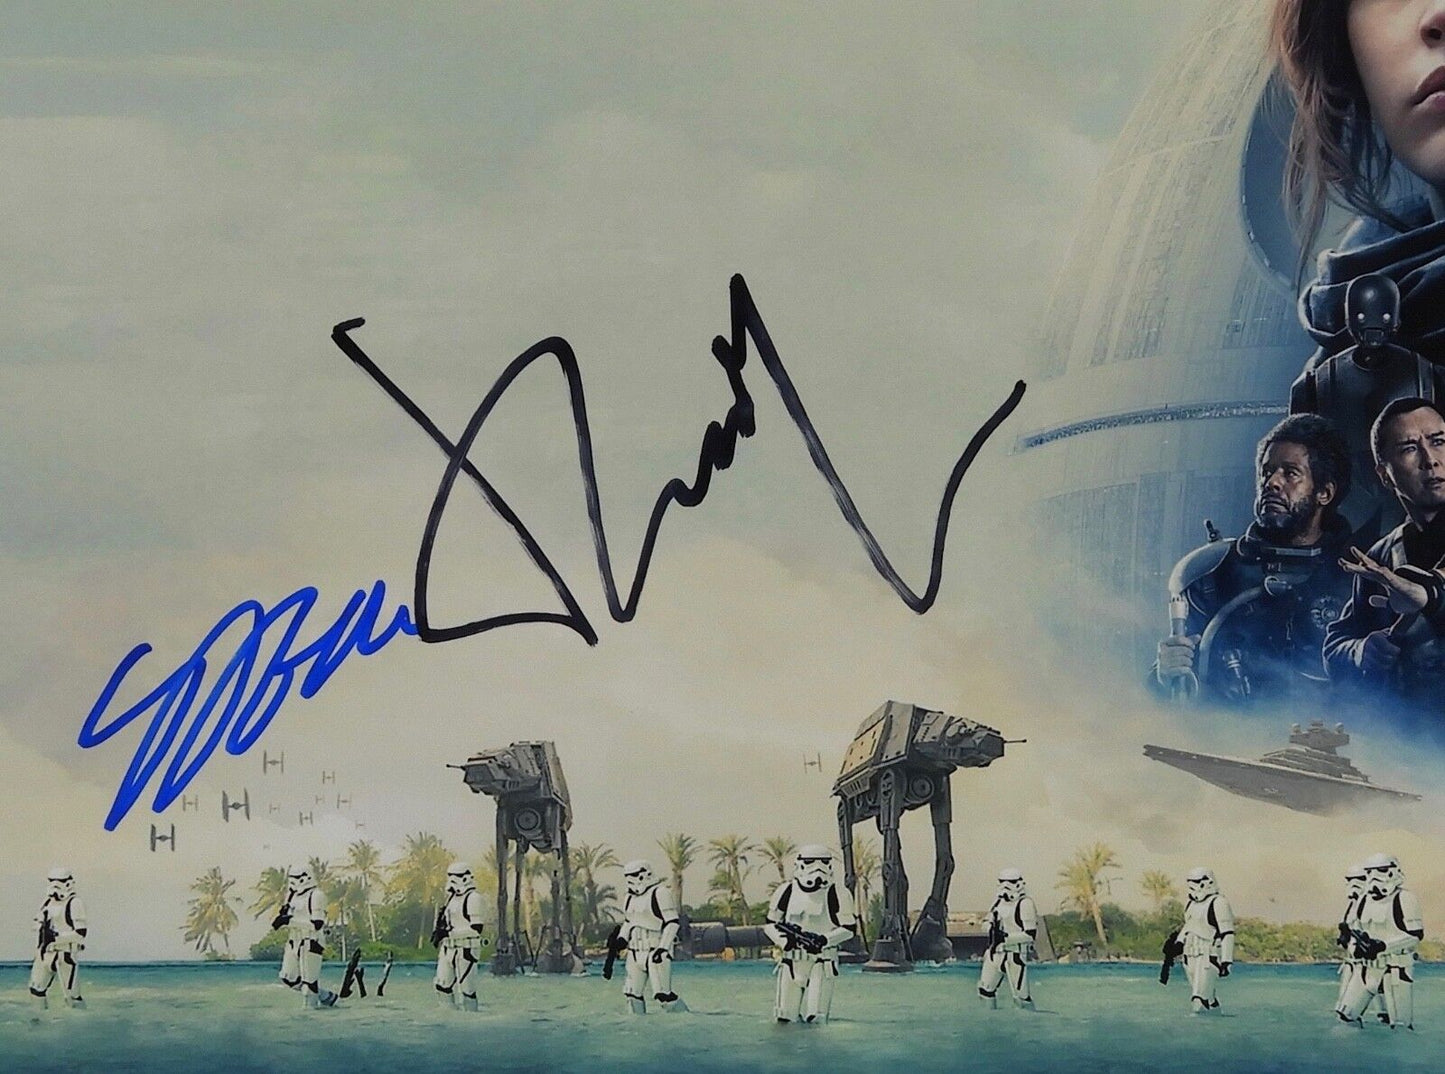 Star Wars Rogue One Donnie Yen Gareth Edwards Signed Autograph JSA 11 x 14 Photo